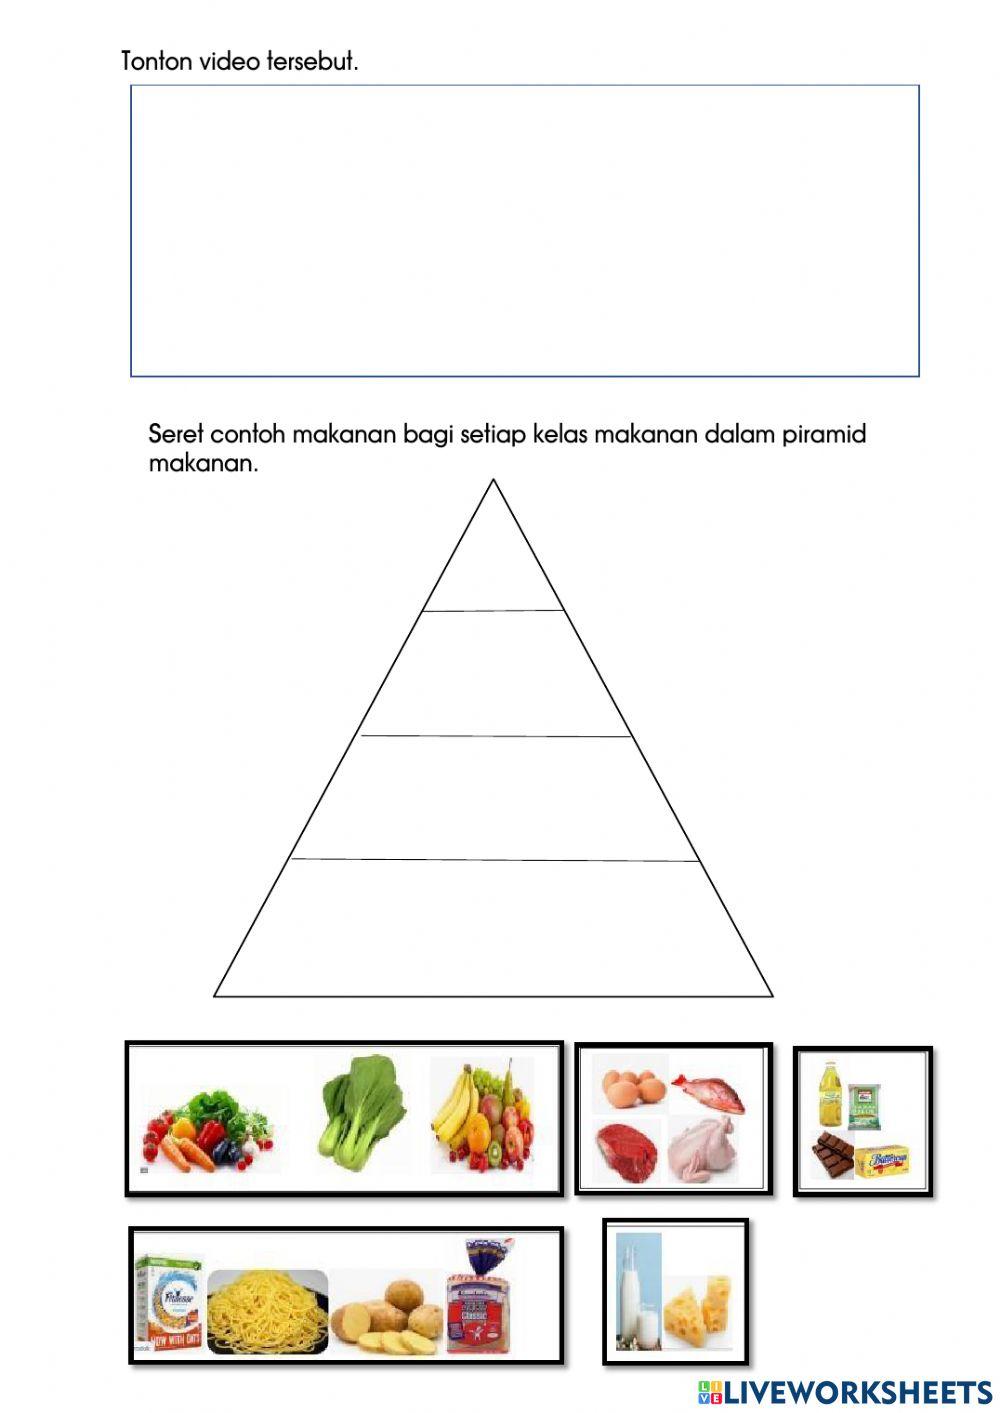 Piramid makanan 2020